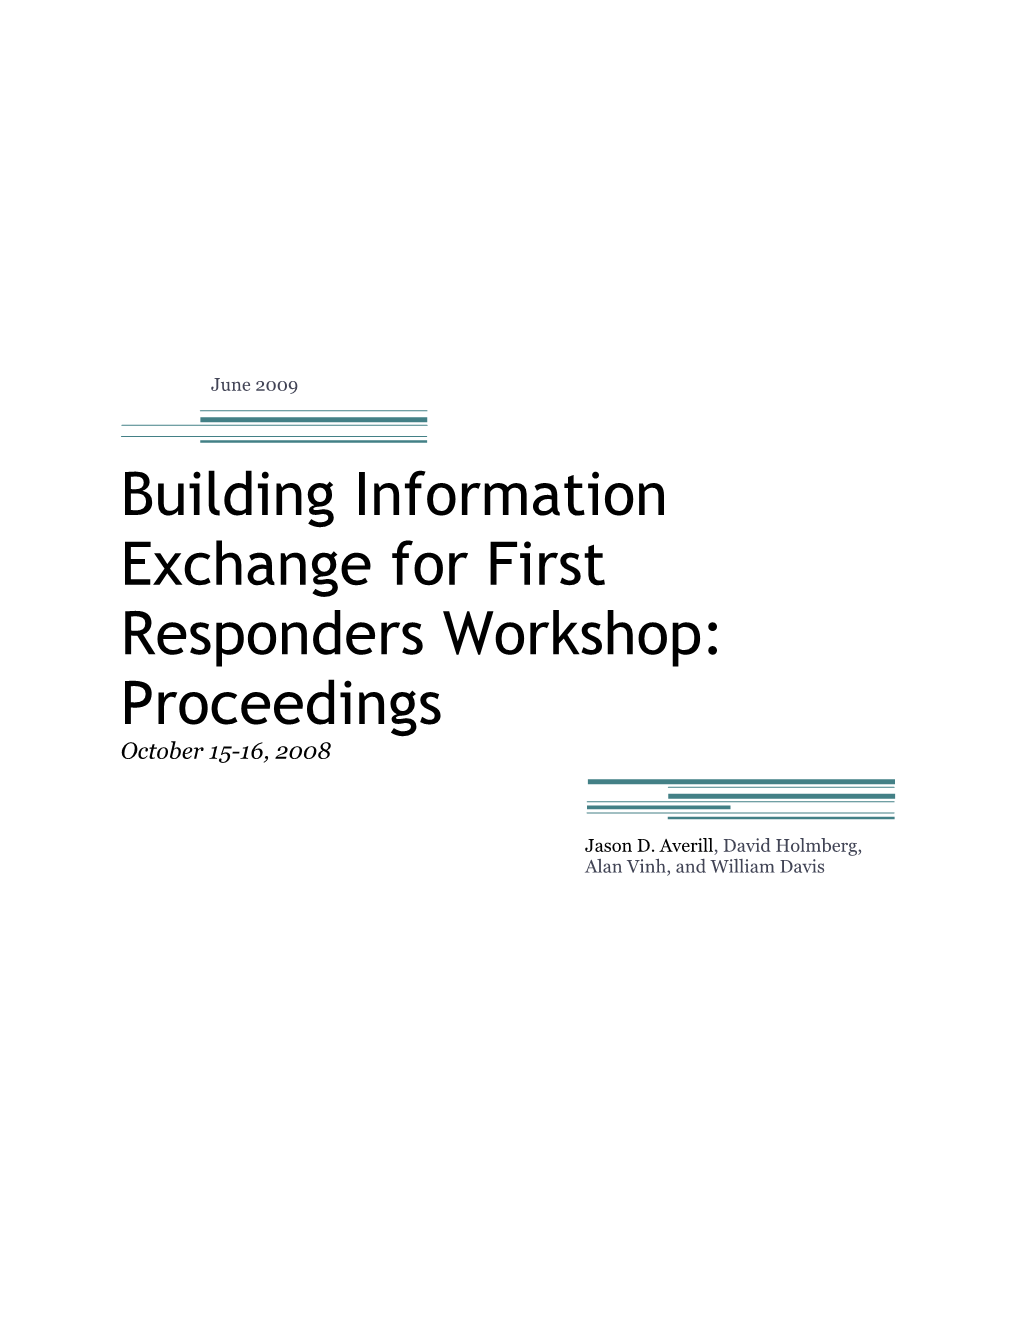 Building Information Exchange for First Responders Workshop: Proceedings October 15-16, 2008